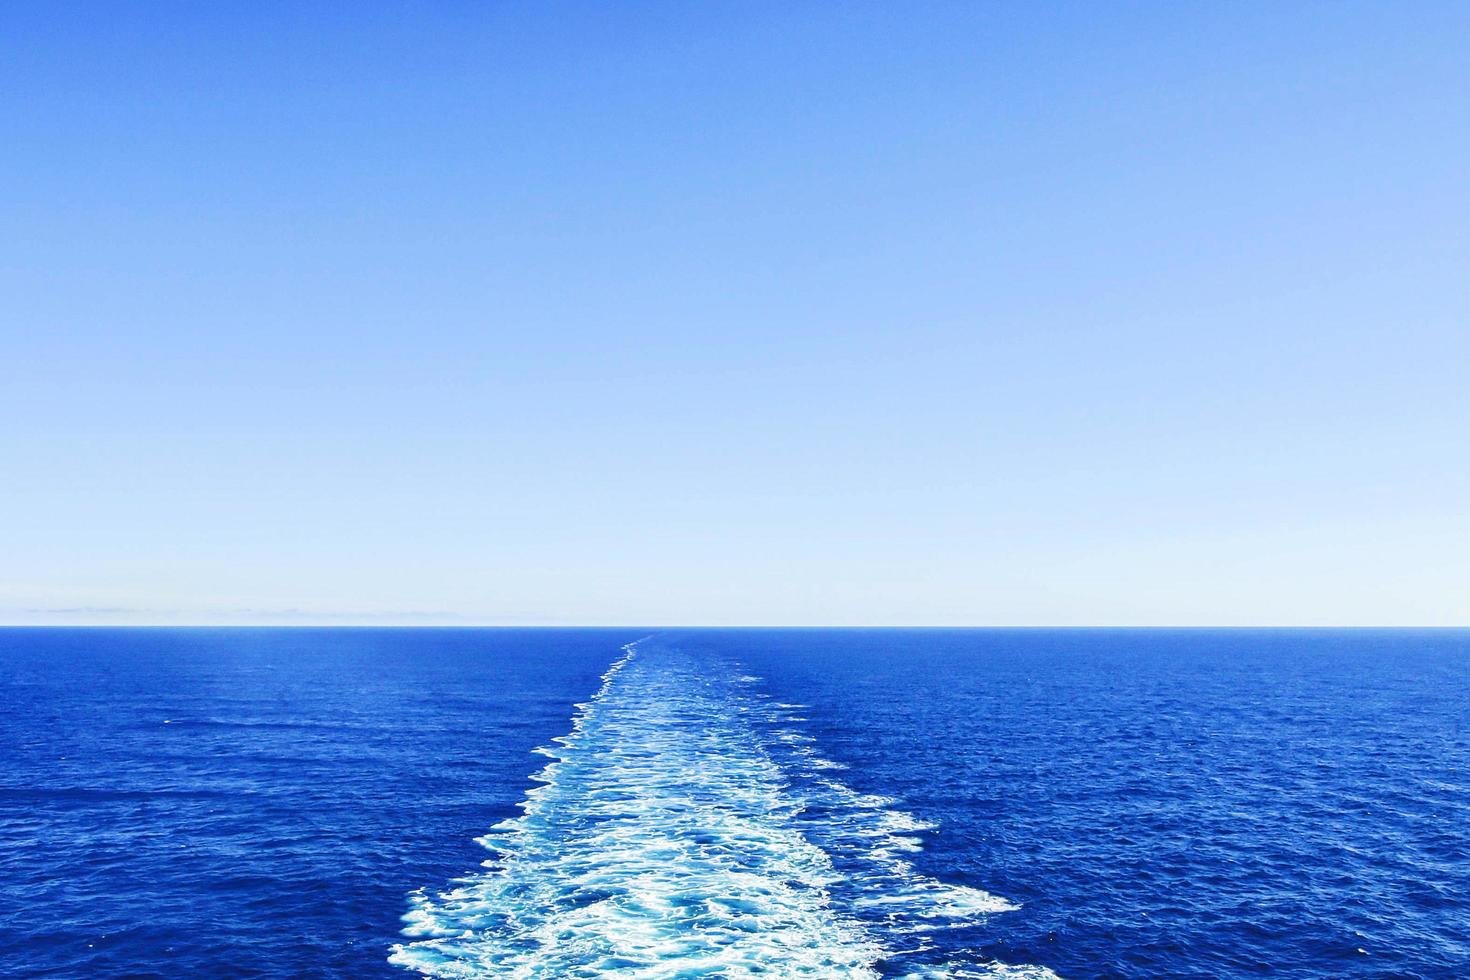 velejar no belo e amplo mar azul foto